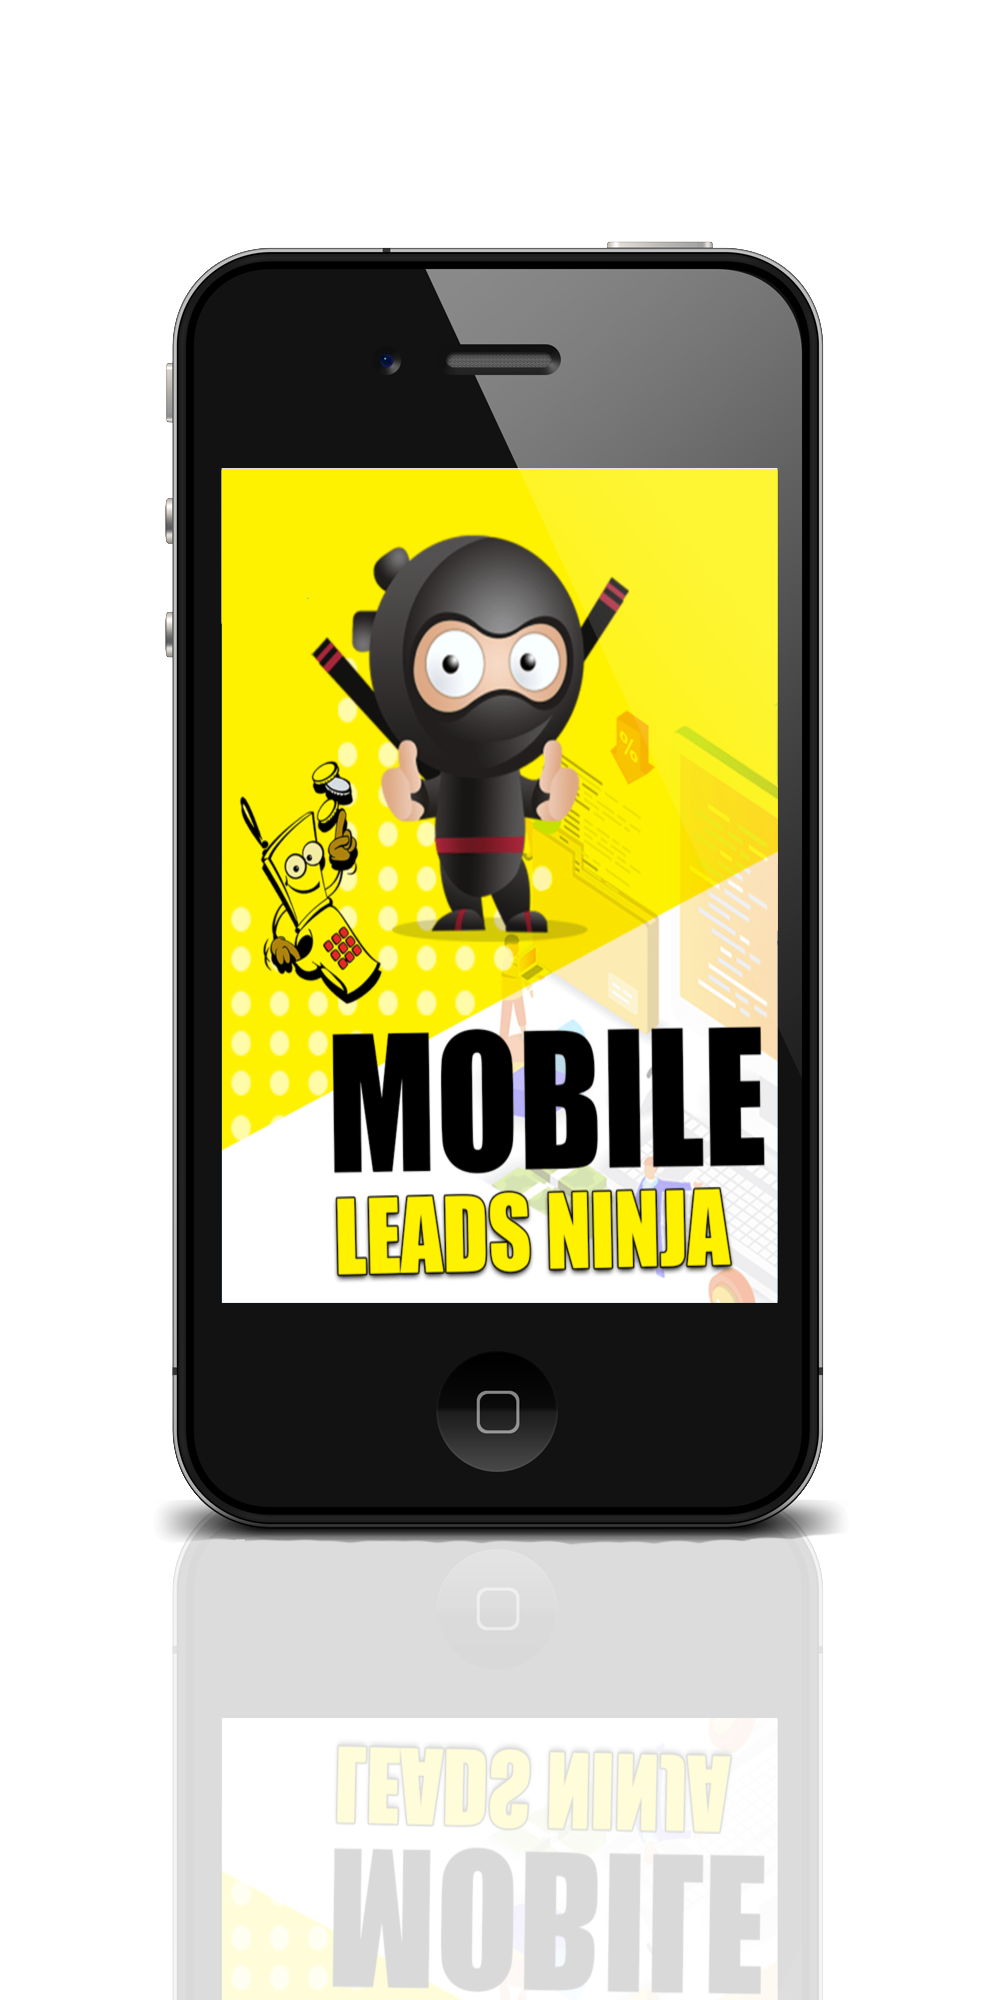 Mobile Leads Ninja Online Course